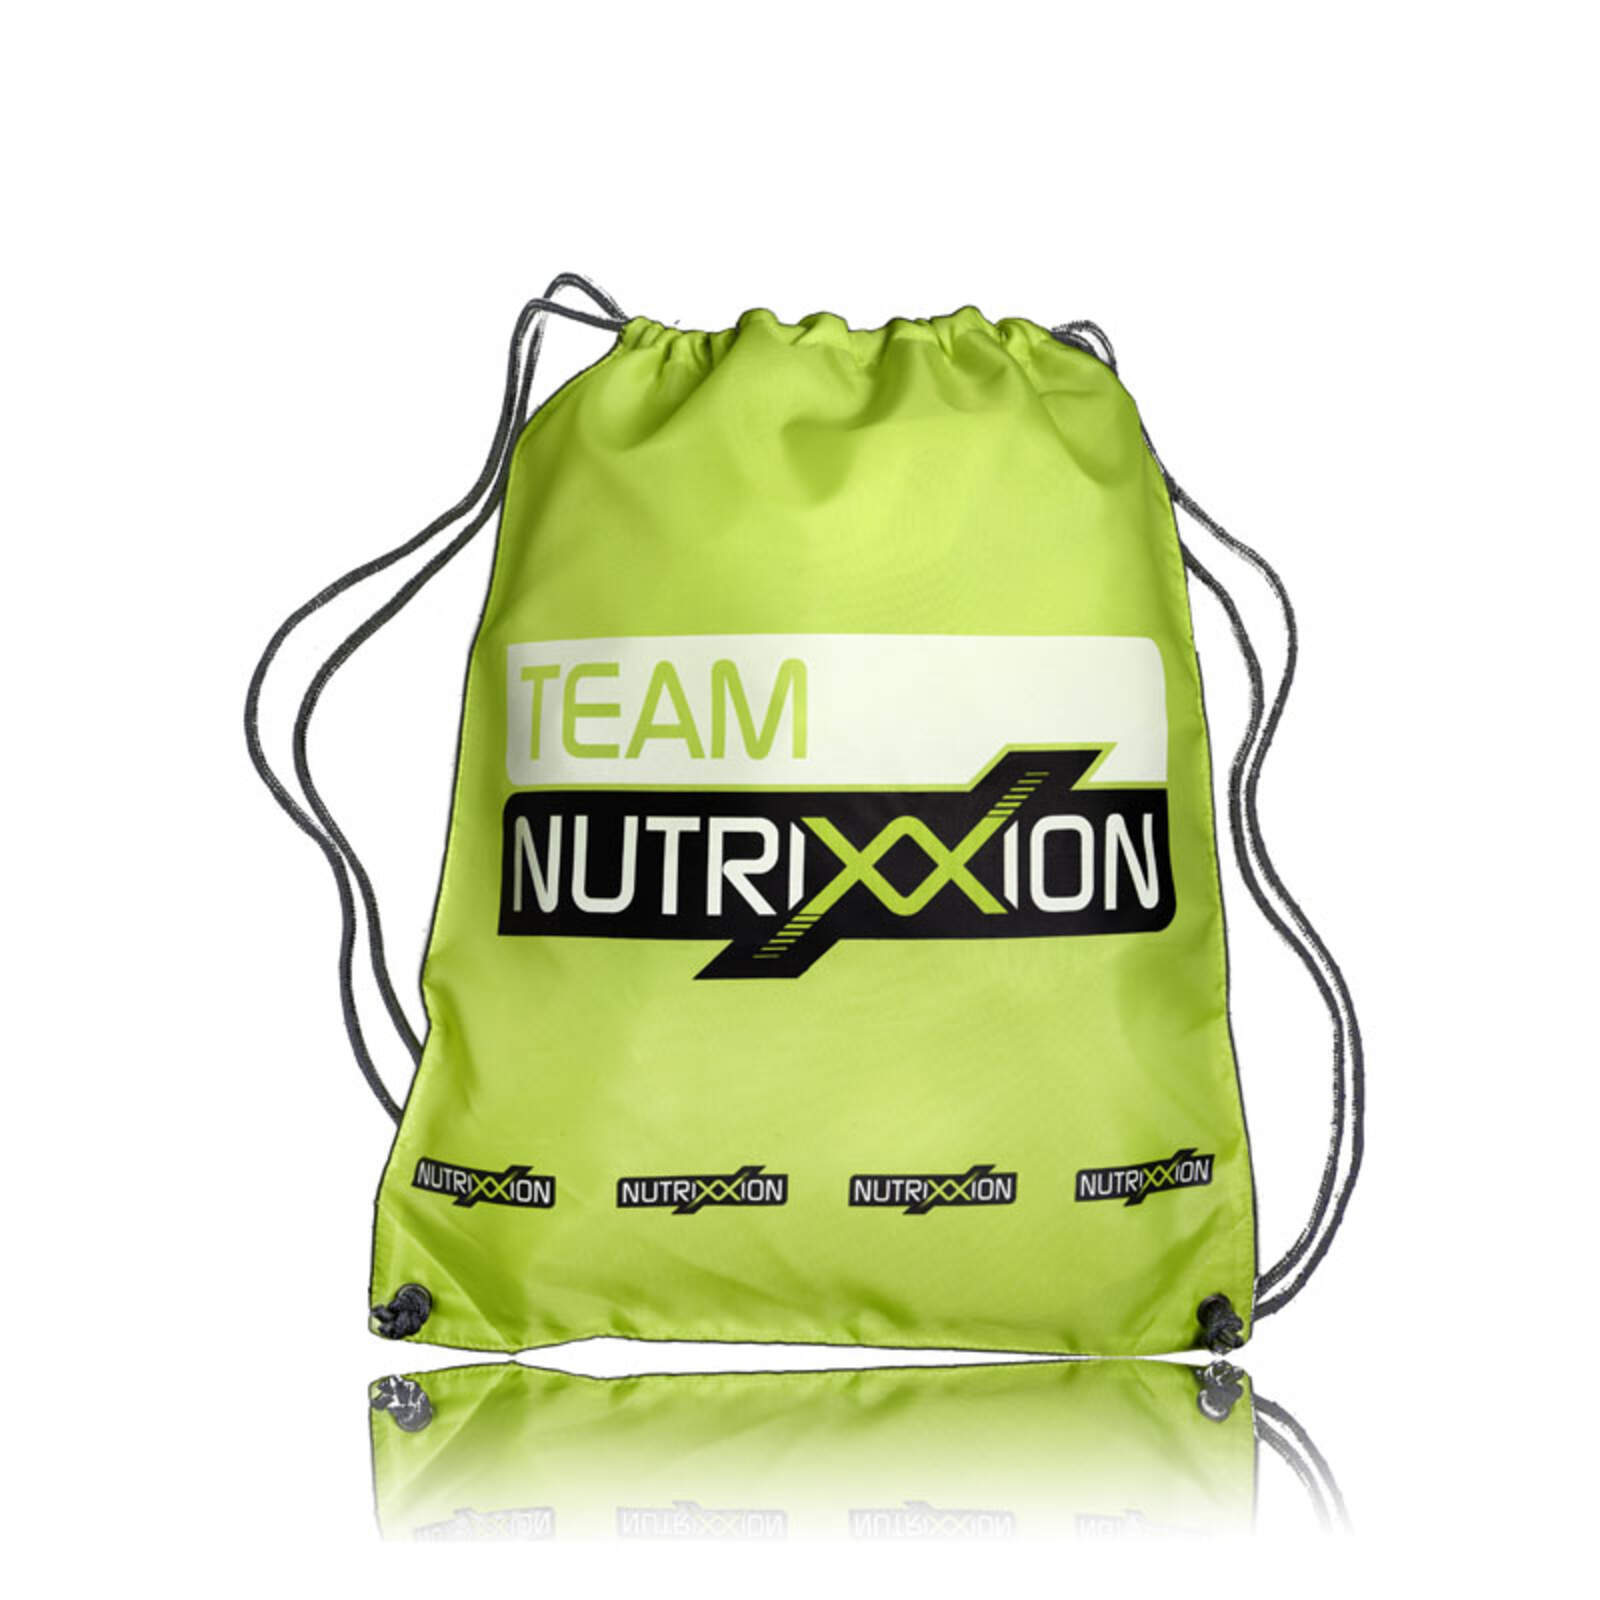 NUTRIXXION Bag